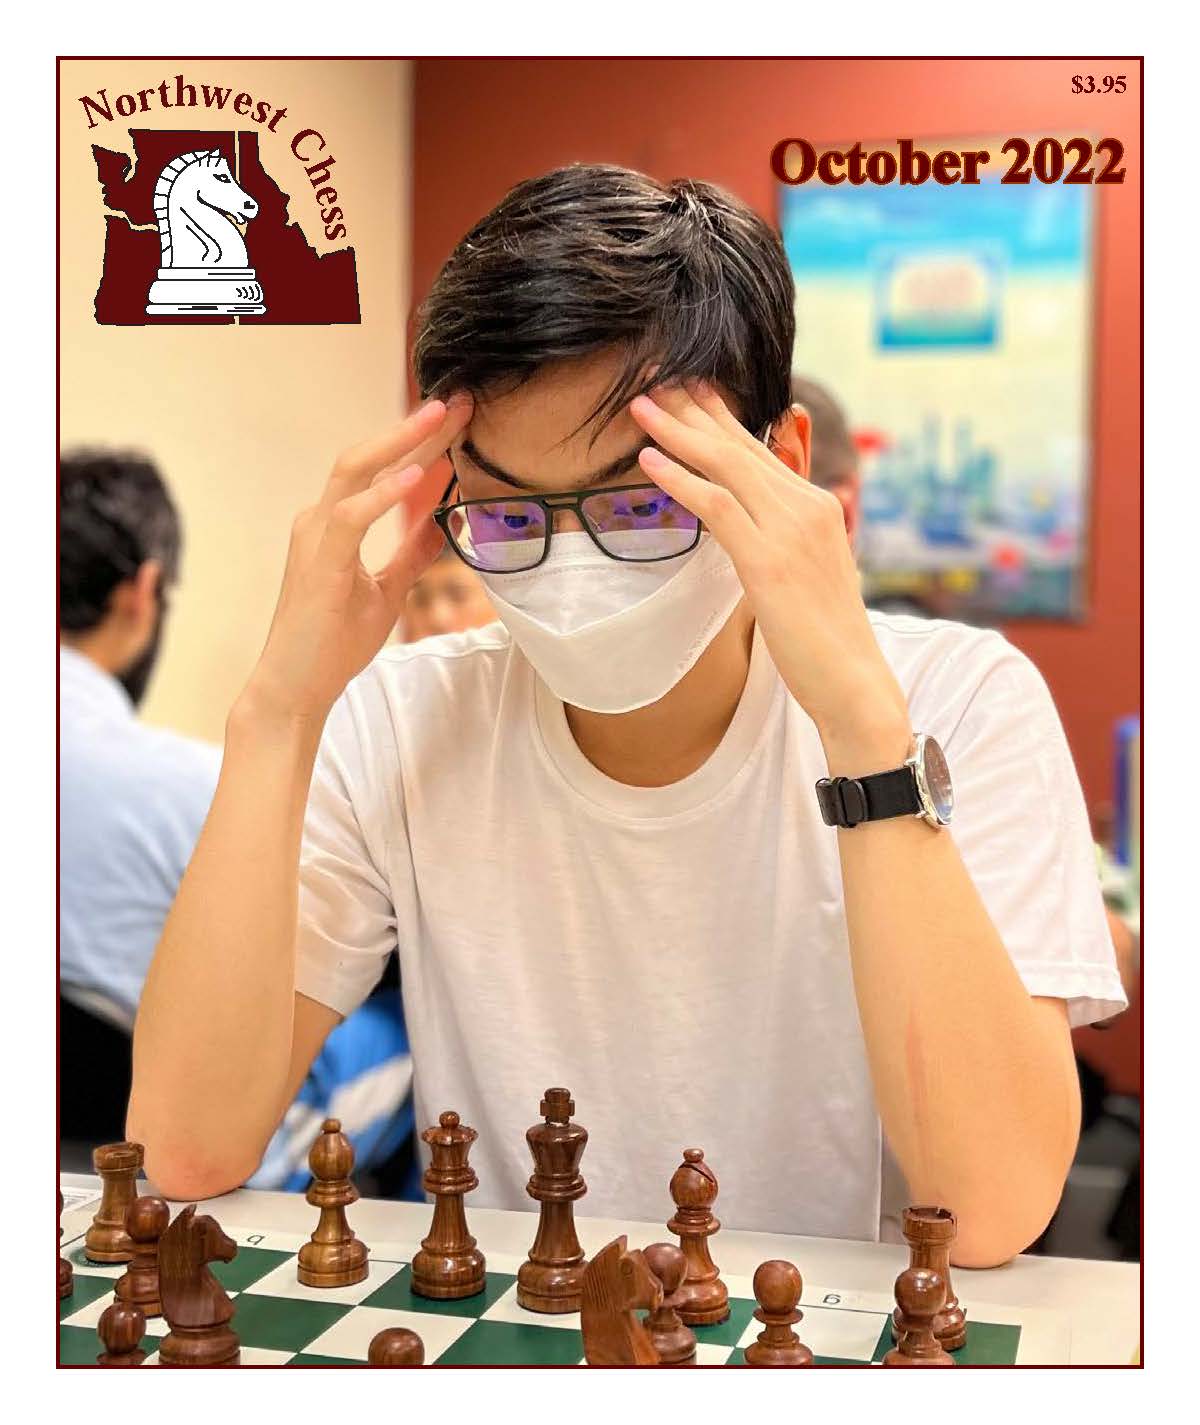 October 2012 - Northwest Chess!